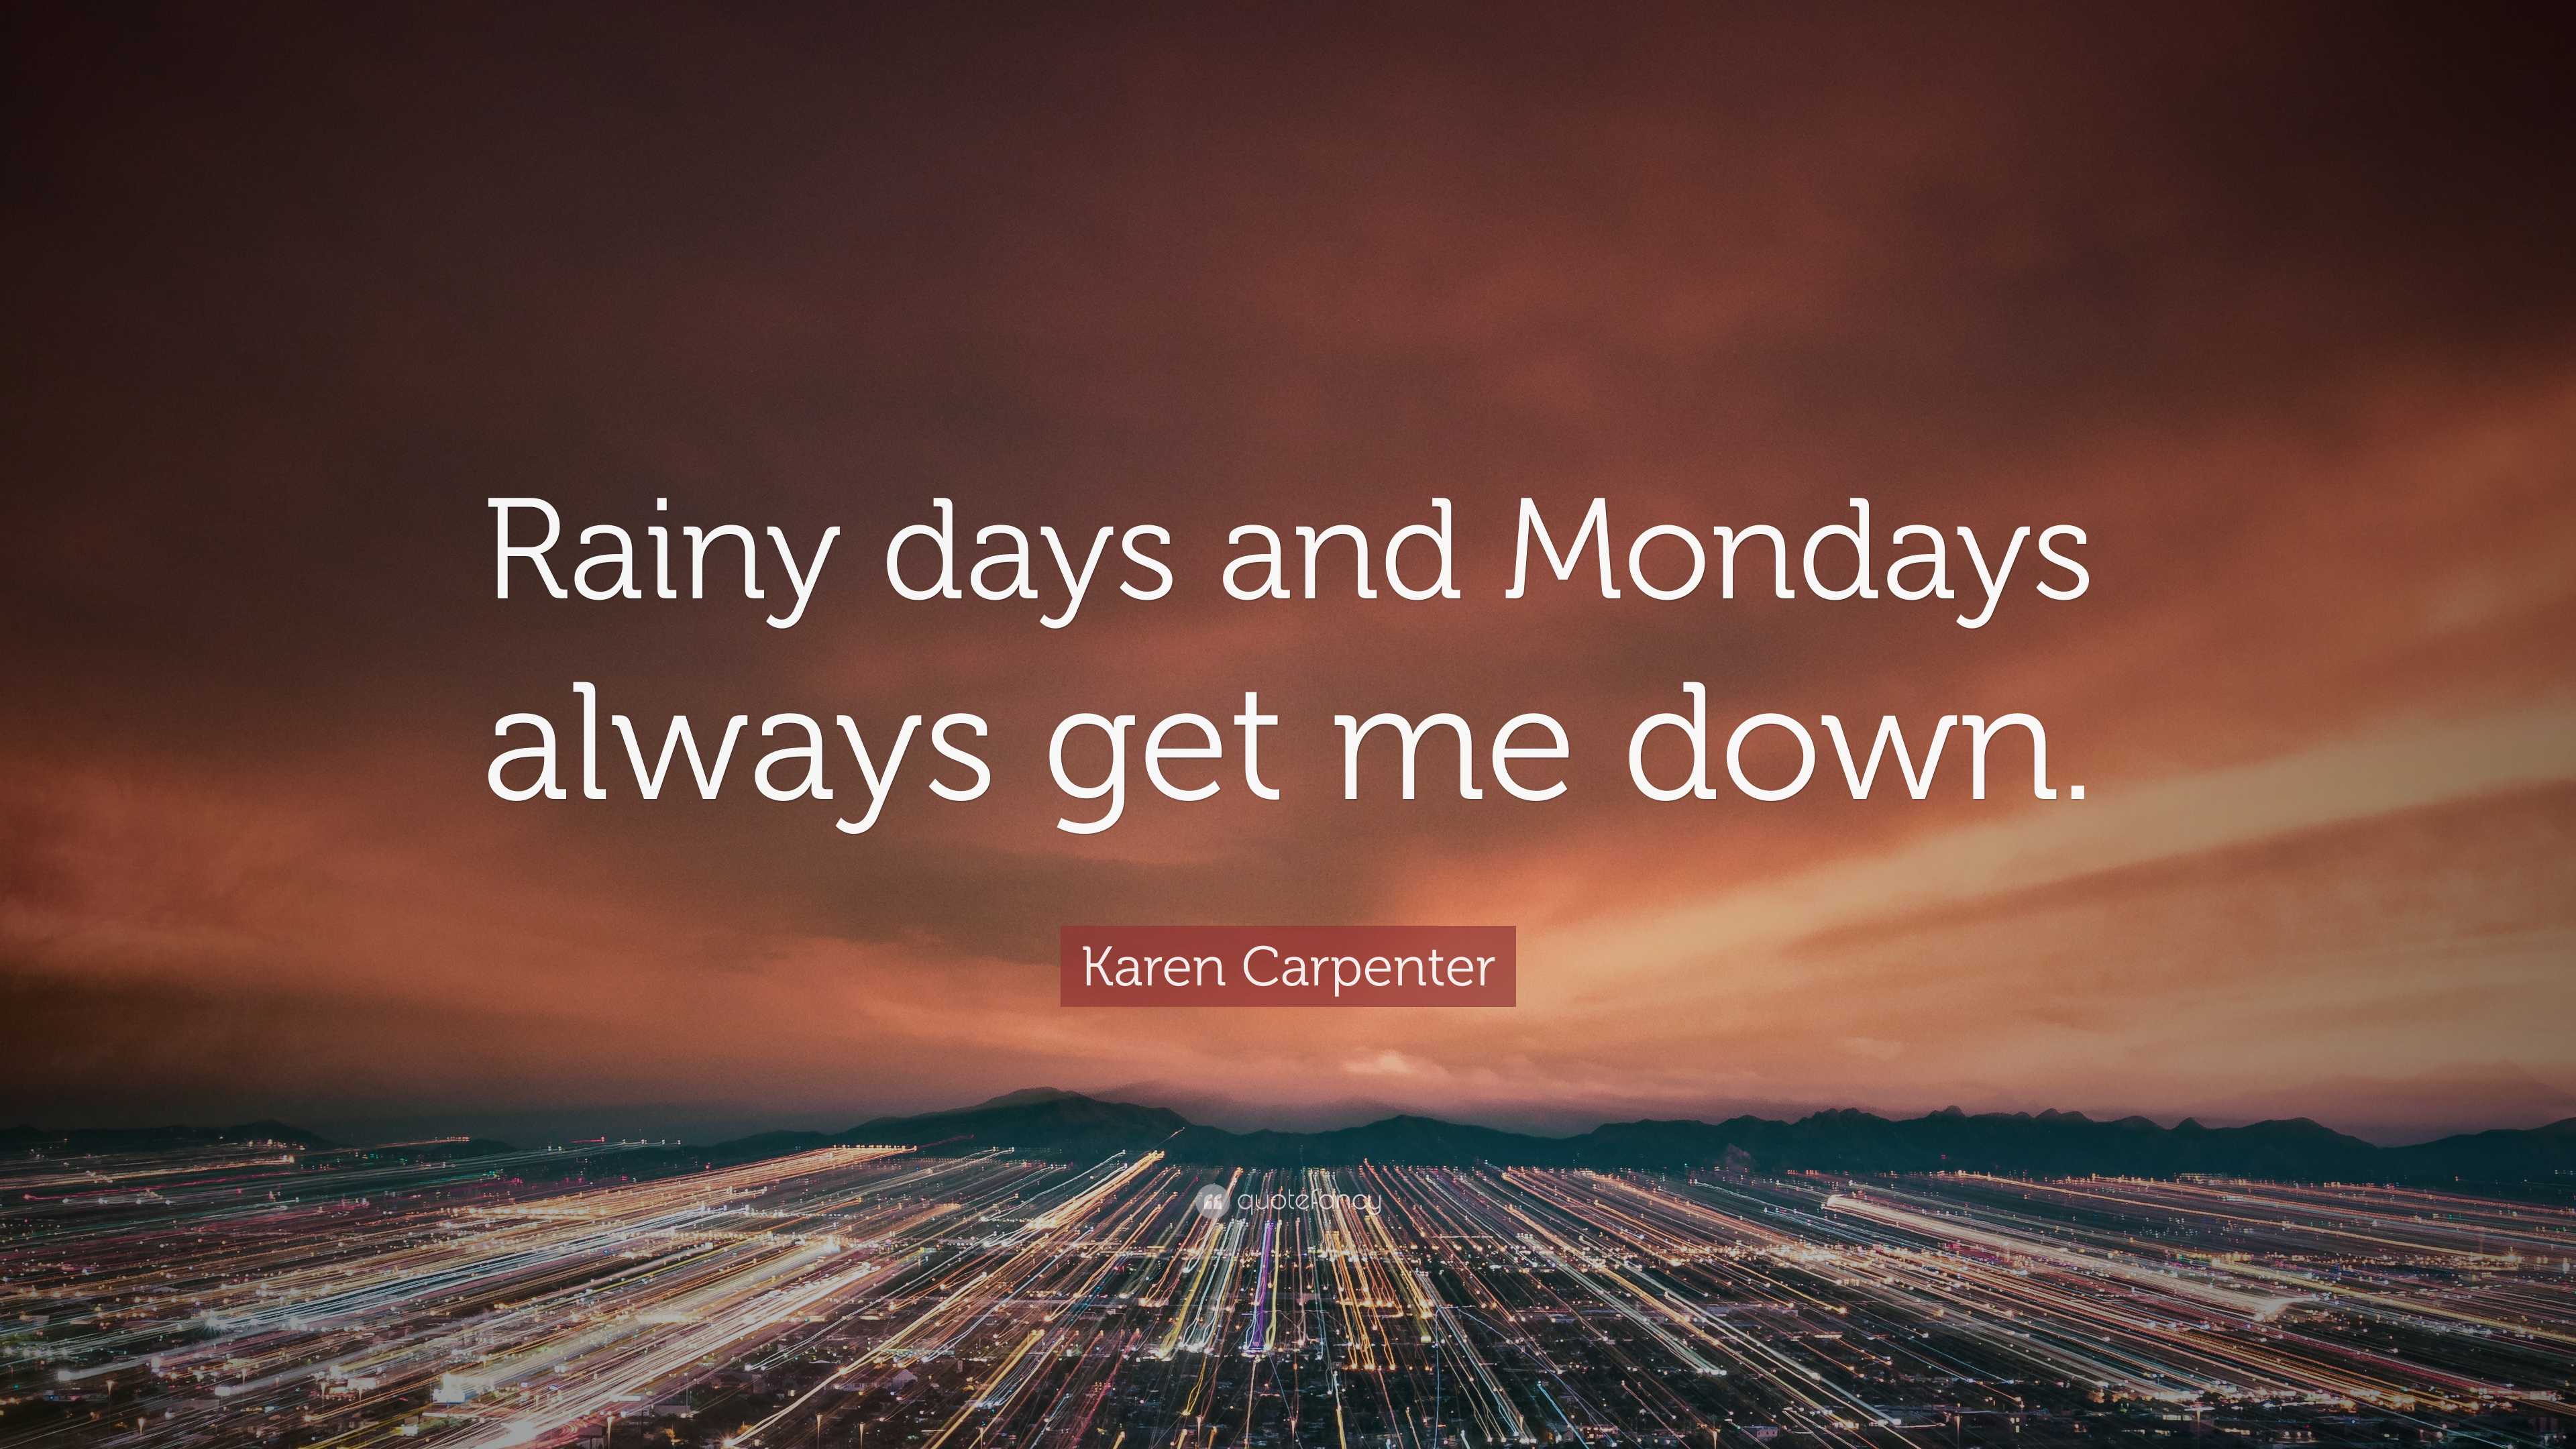 Karen Carpenter Quote: “Rainy days and Mondays always get me down.”